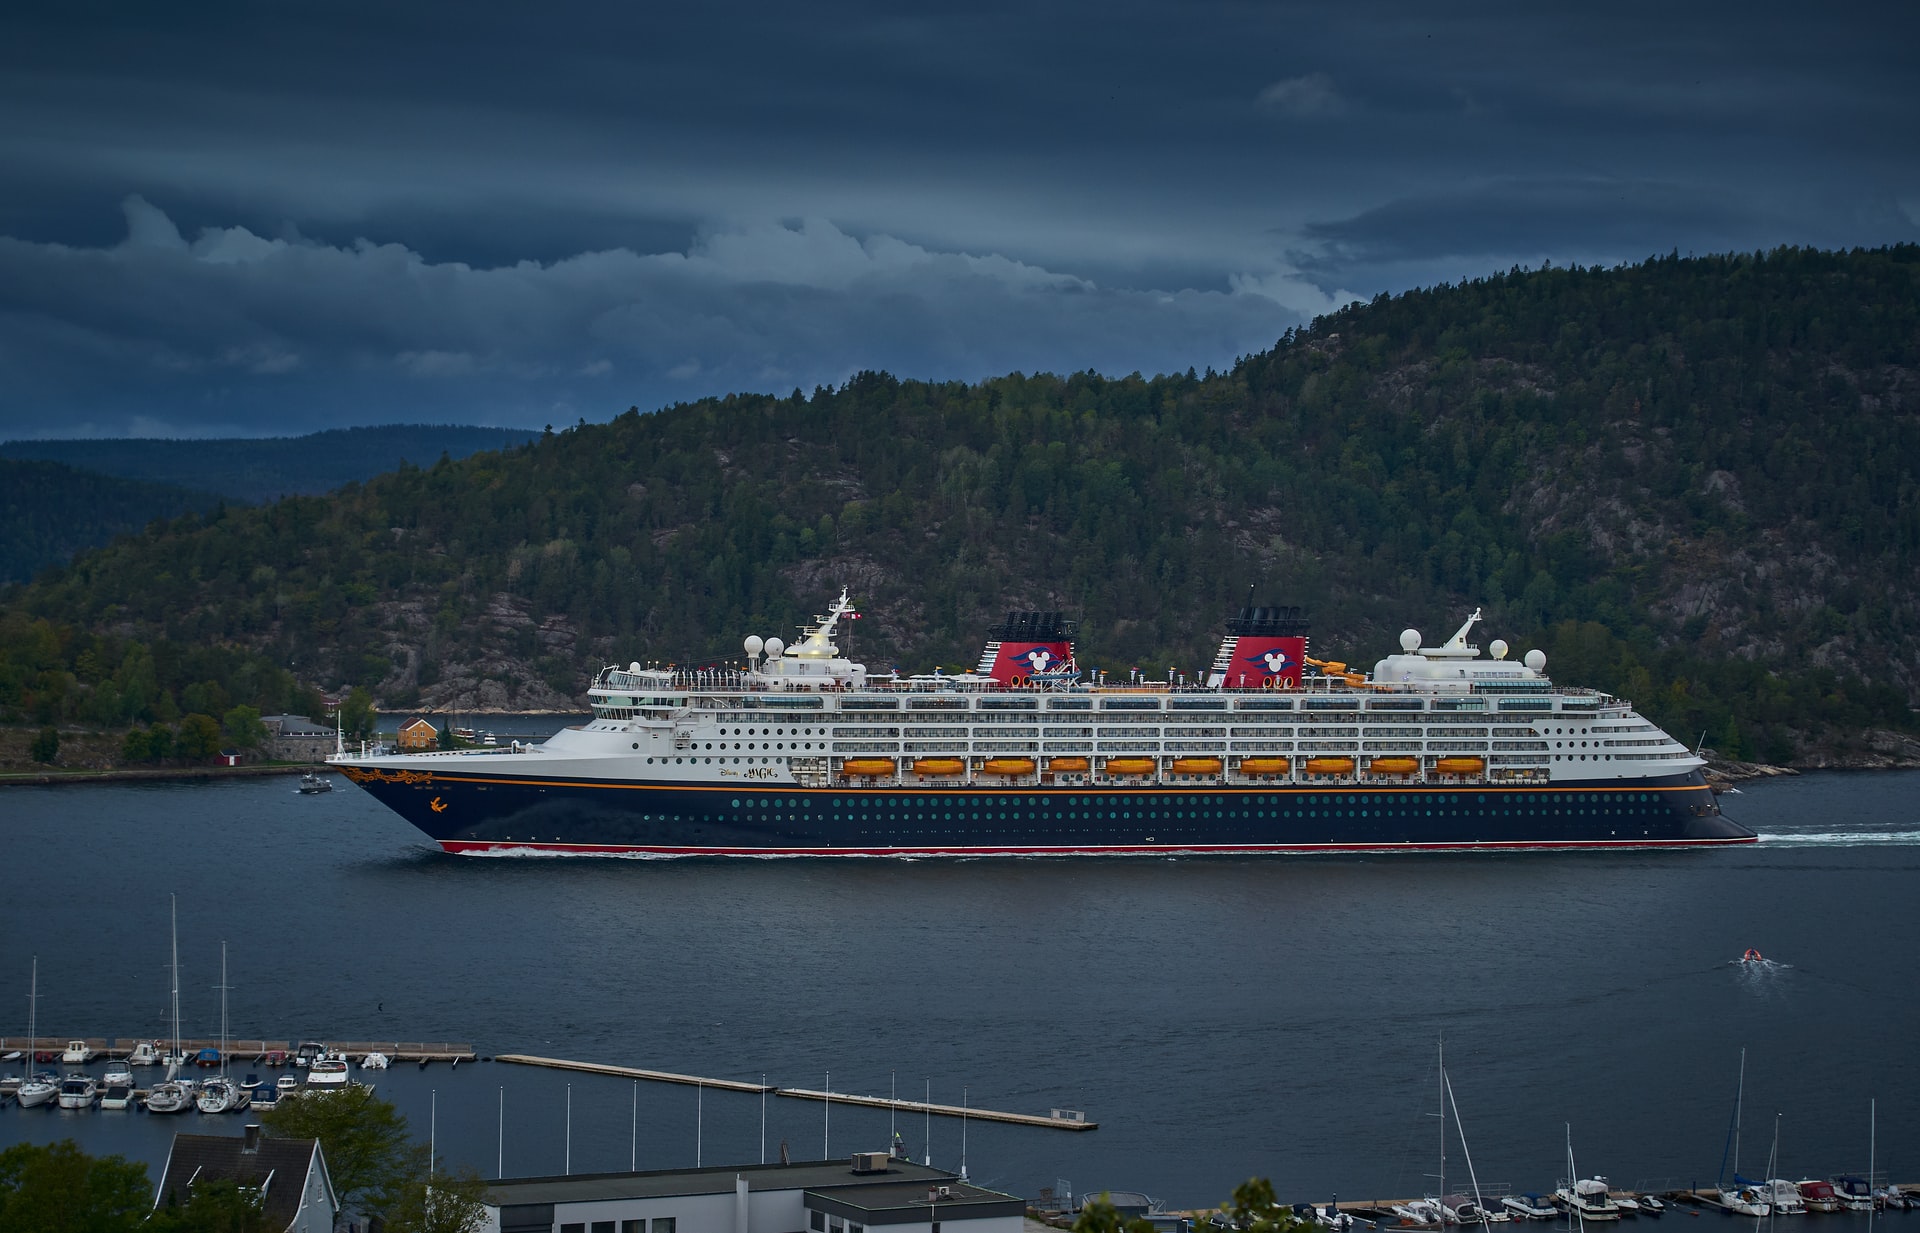 Disney Magic cruise ship by Vidar Nordli-Mathisen on Unsplash